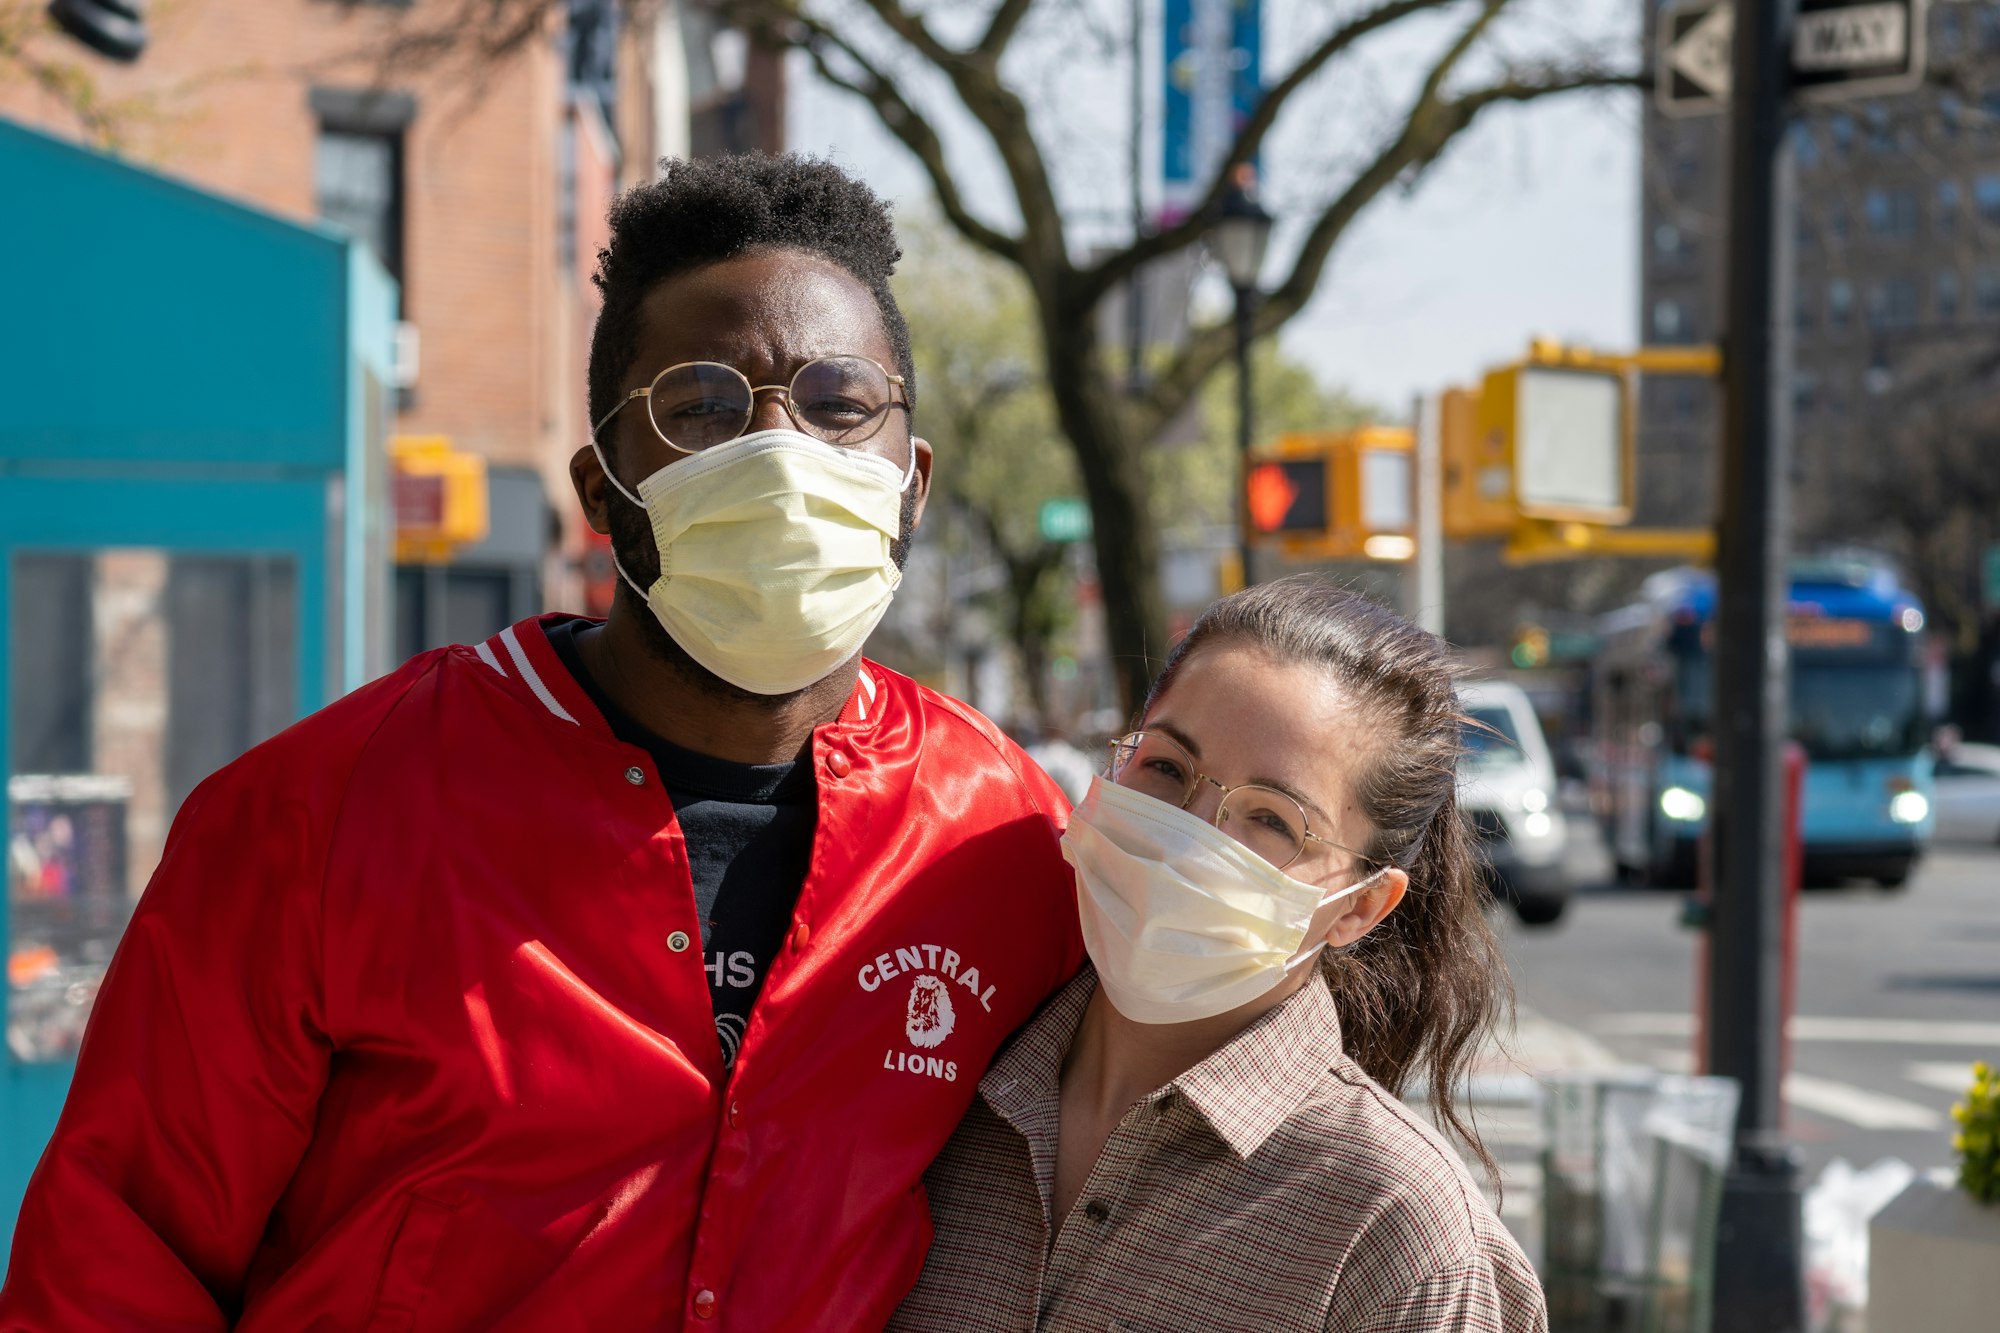 A couple enjoying the sunshine during New York City's #Coronavirus Quarantine, found walking up Flatbush Avenue in Brooklyn. #NYC #Covid